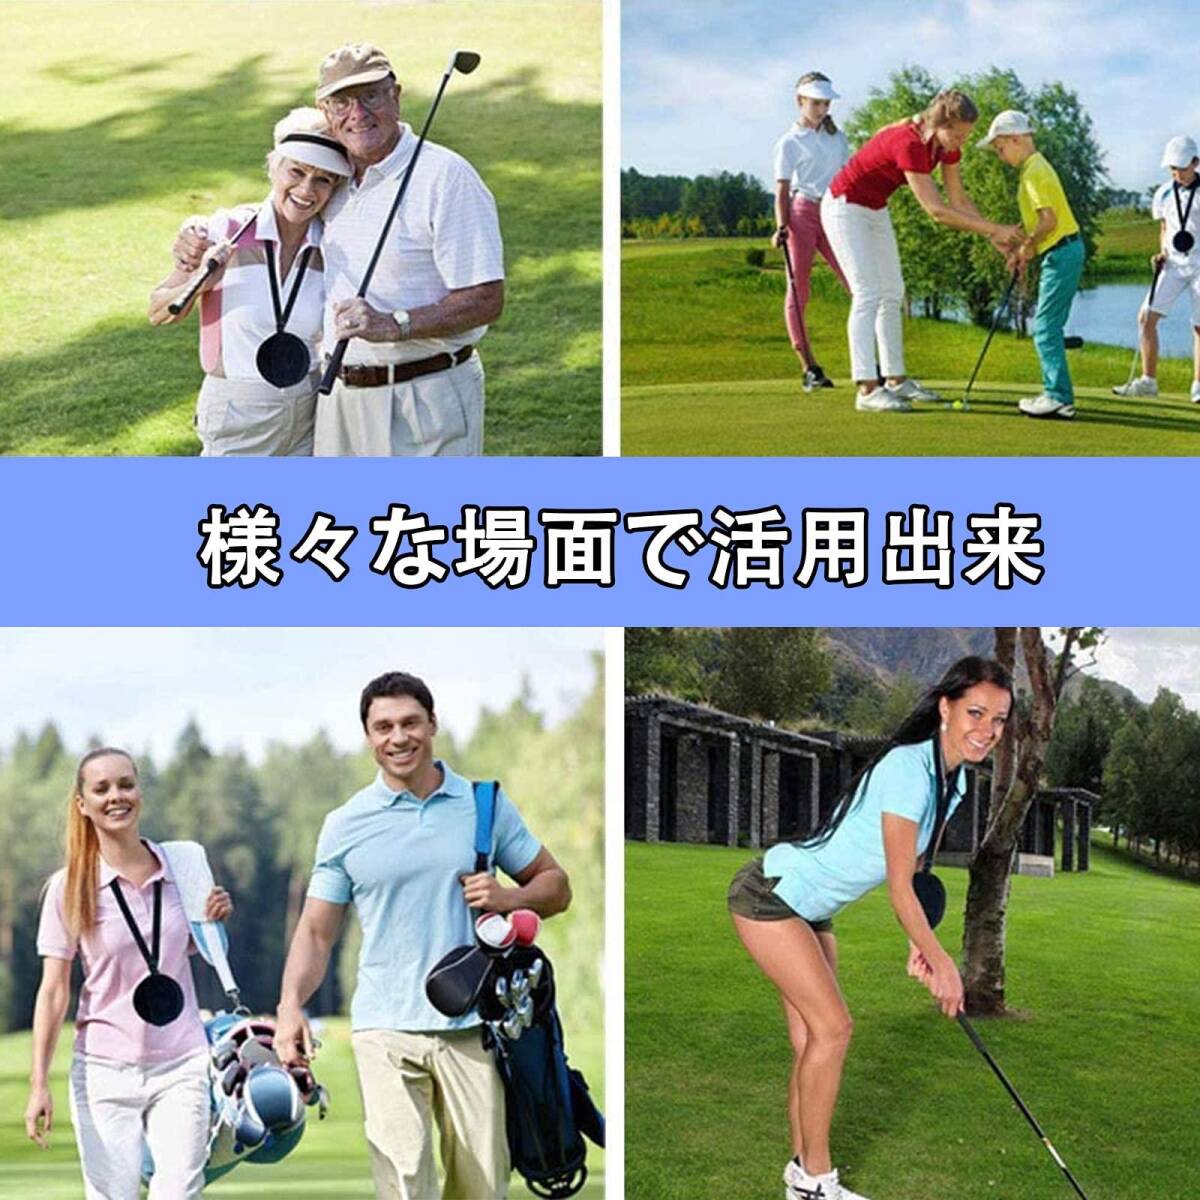 Rouly ゴルフ スイング矯正 練習ボール スイング 練習 ゴルフ矯正 姿勢矯正 ゴルフ練習器具 エアポンプ付き_画像7